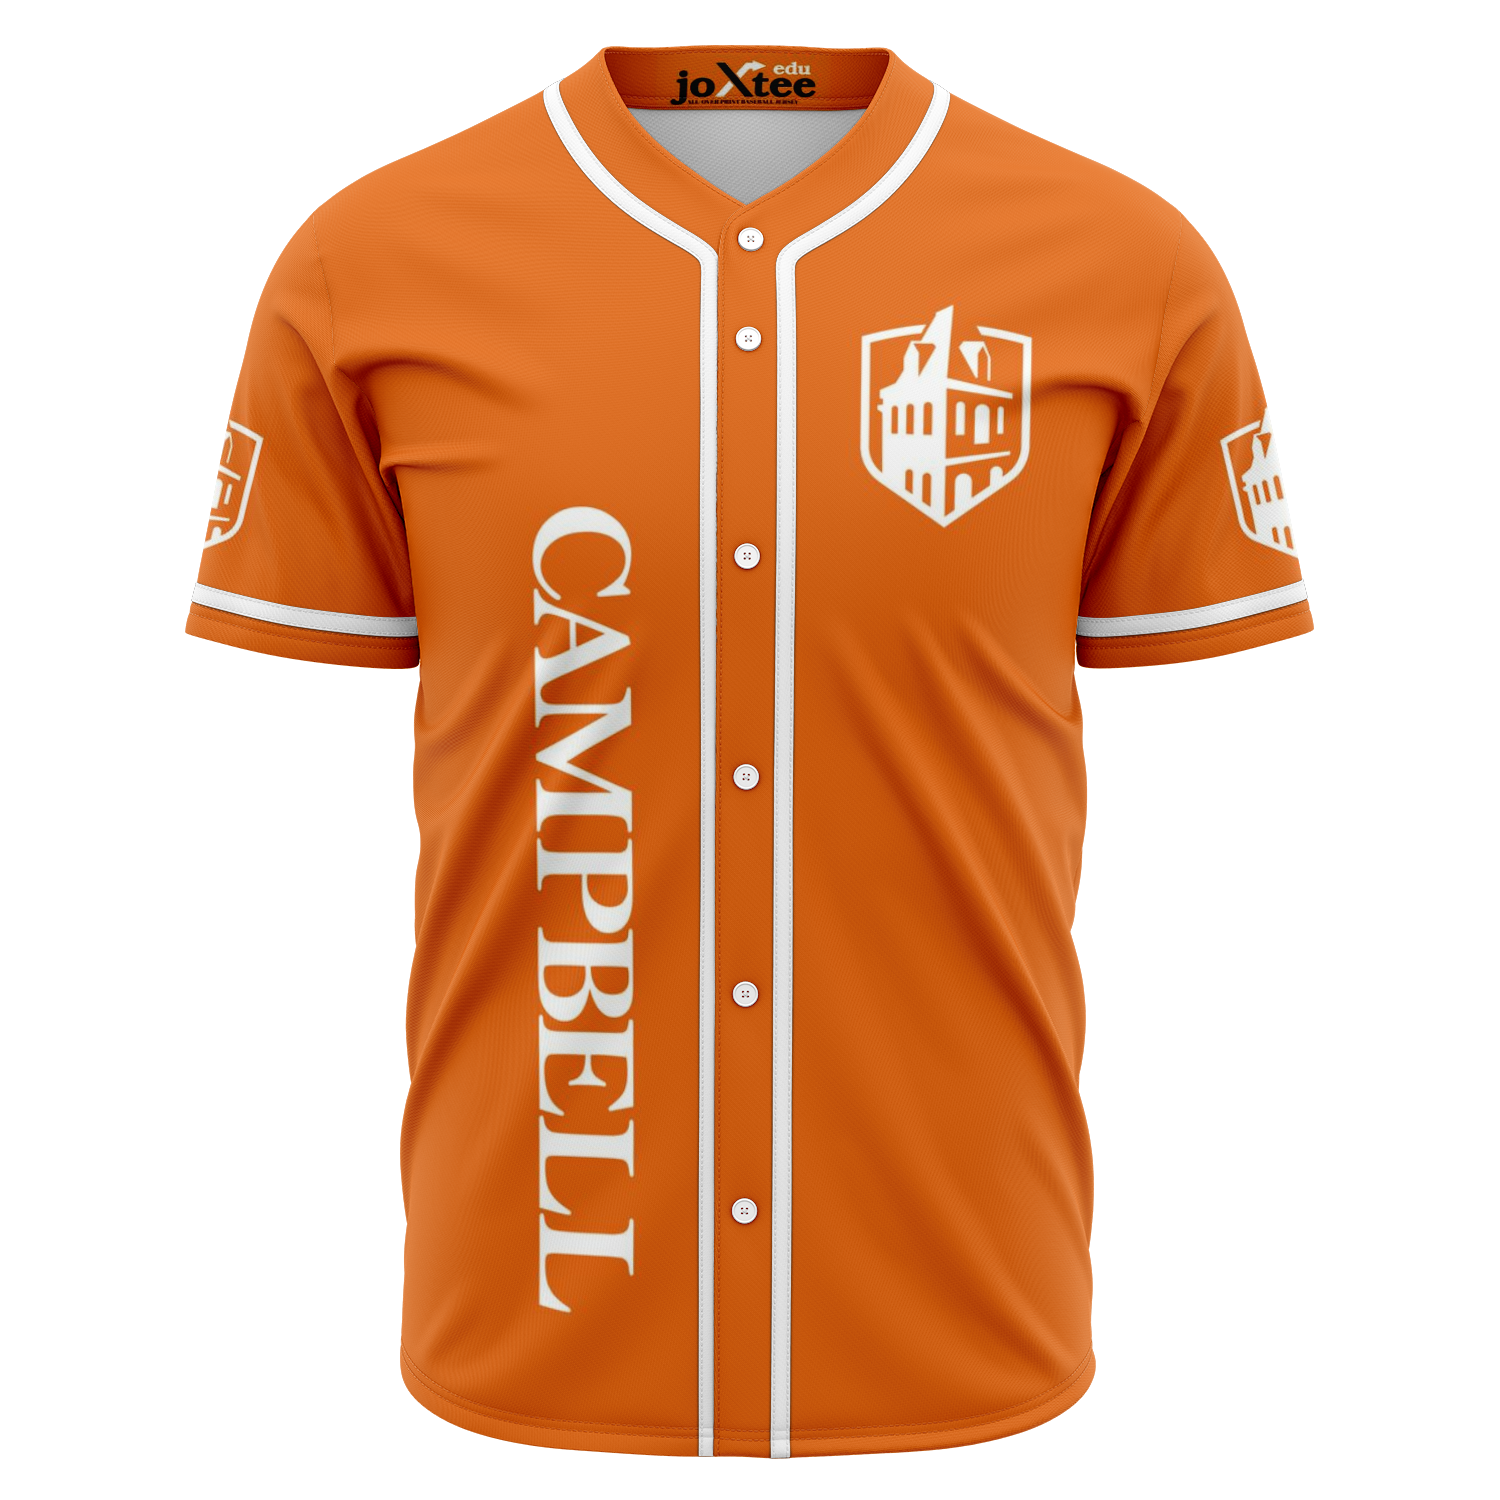 Campbell Baseball Jersey - Orange